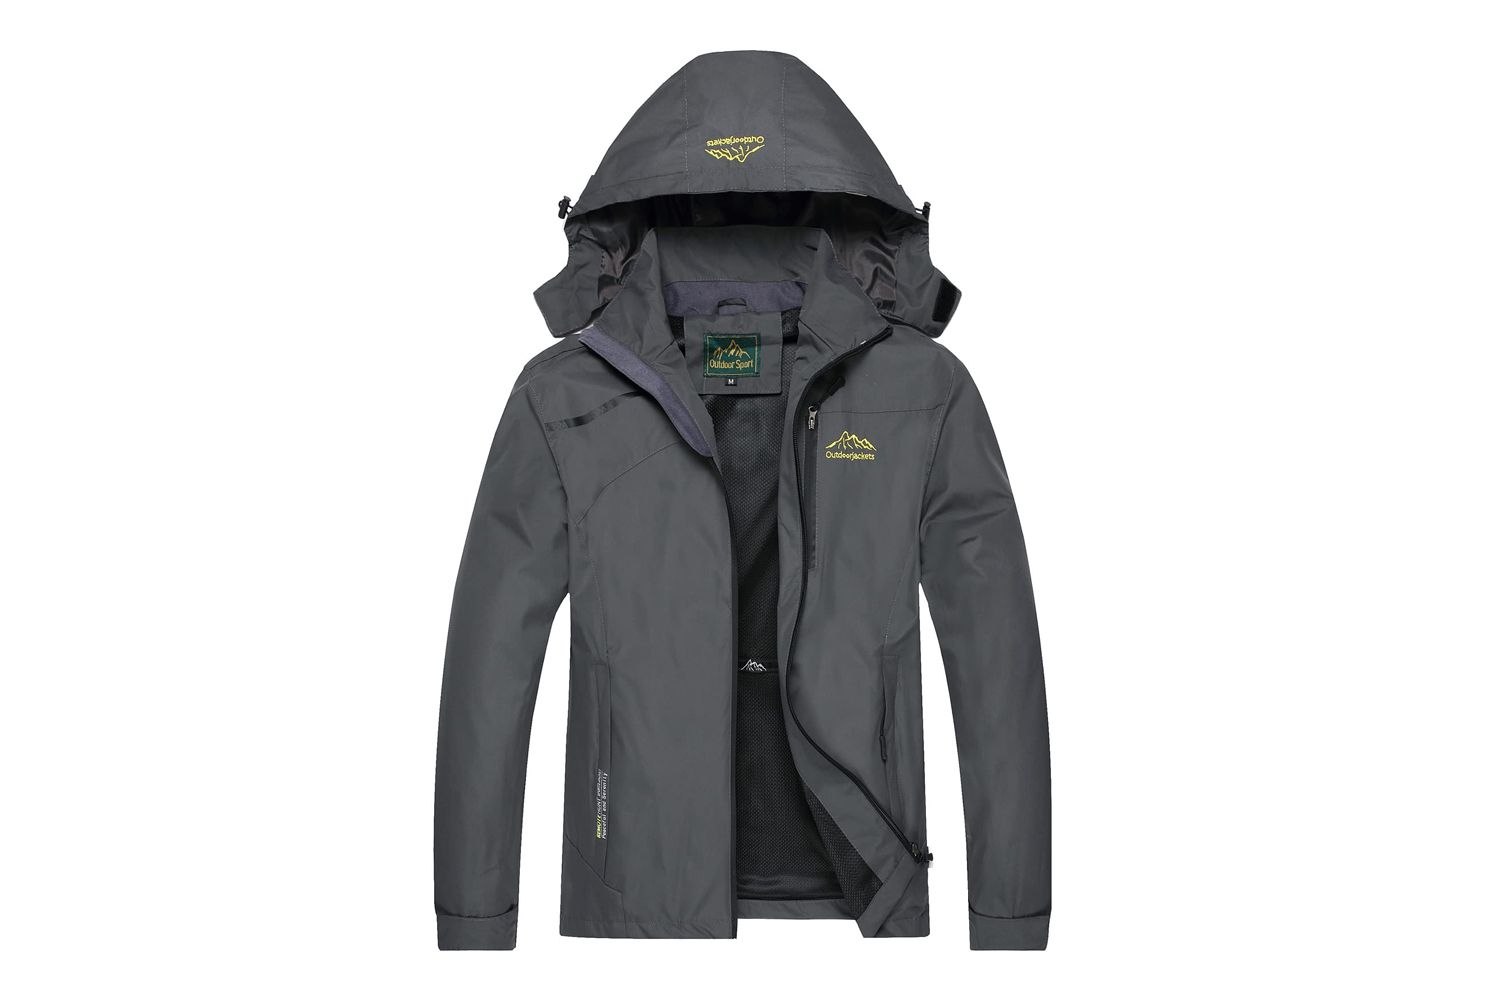 Amazon GIISAM Men's Windproof Waterproof Jacket